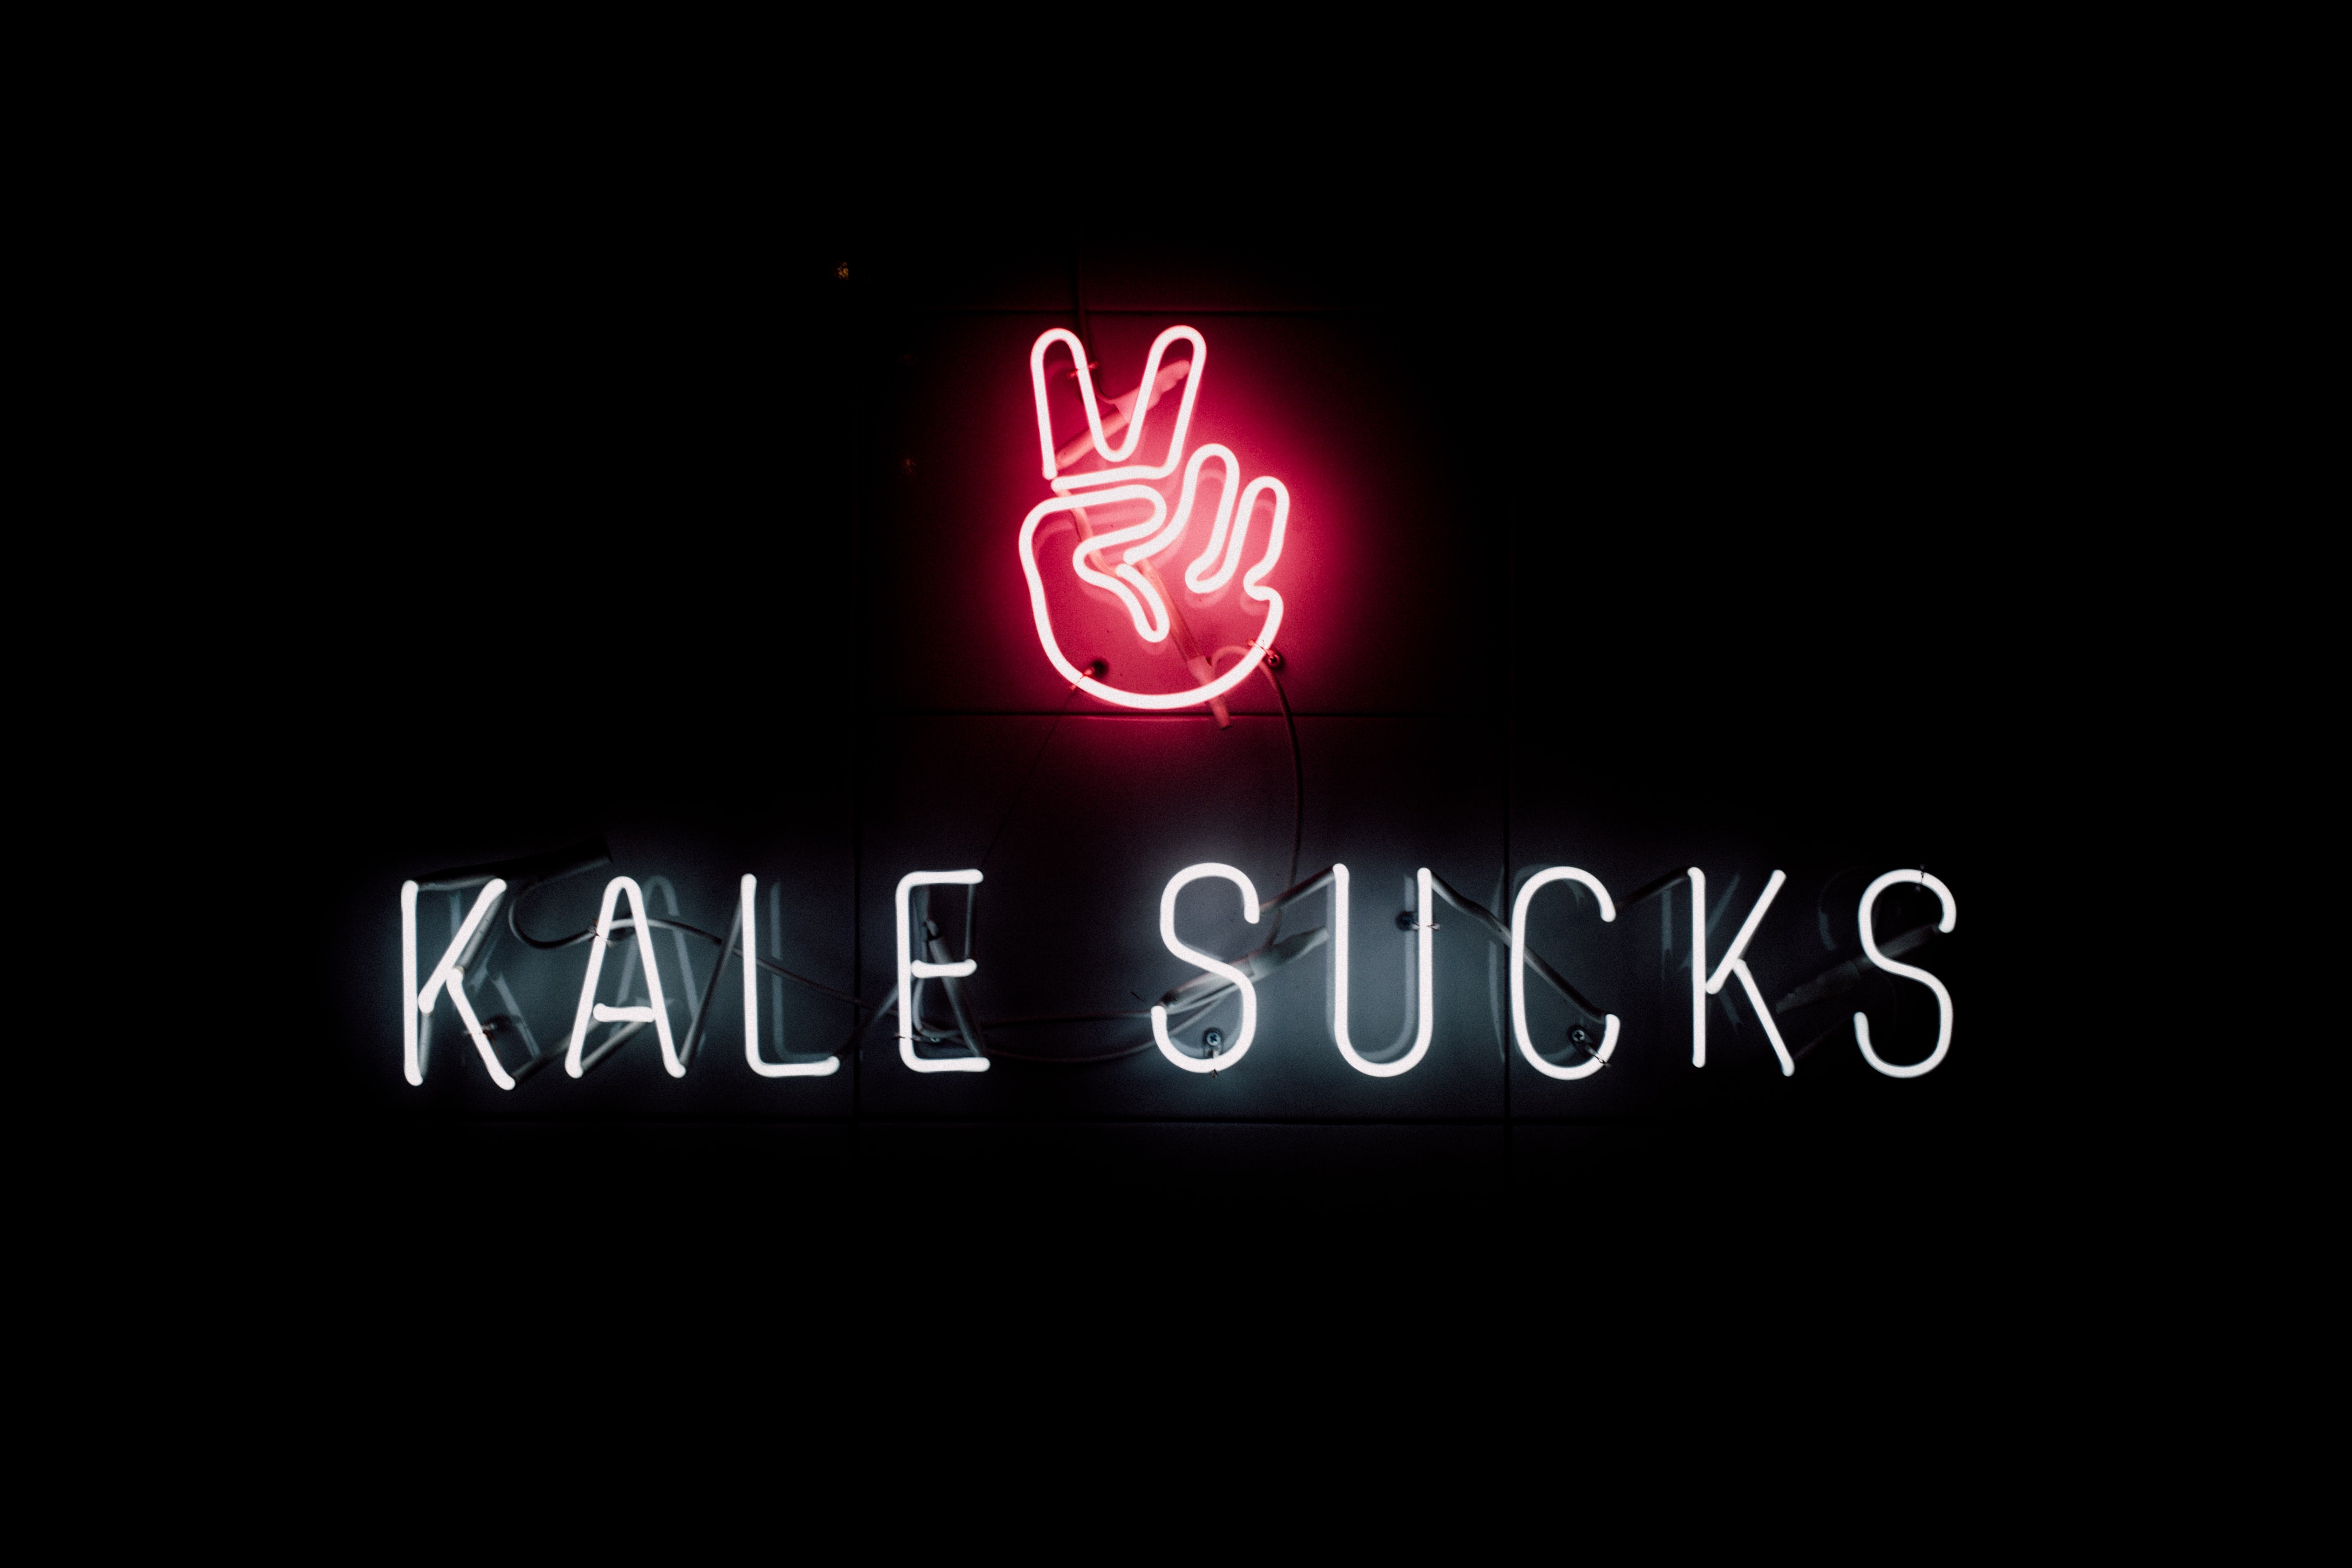 Light sign spelling out "kale sucks"